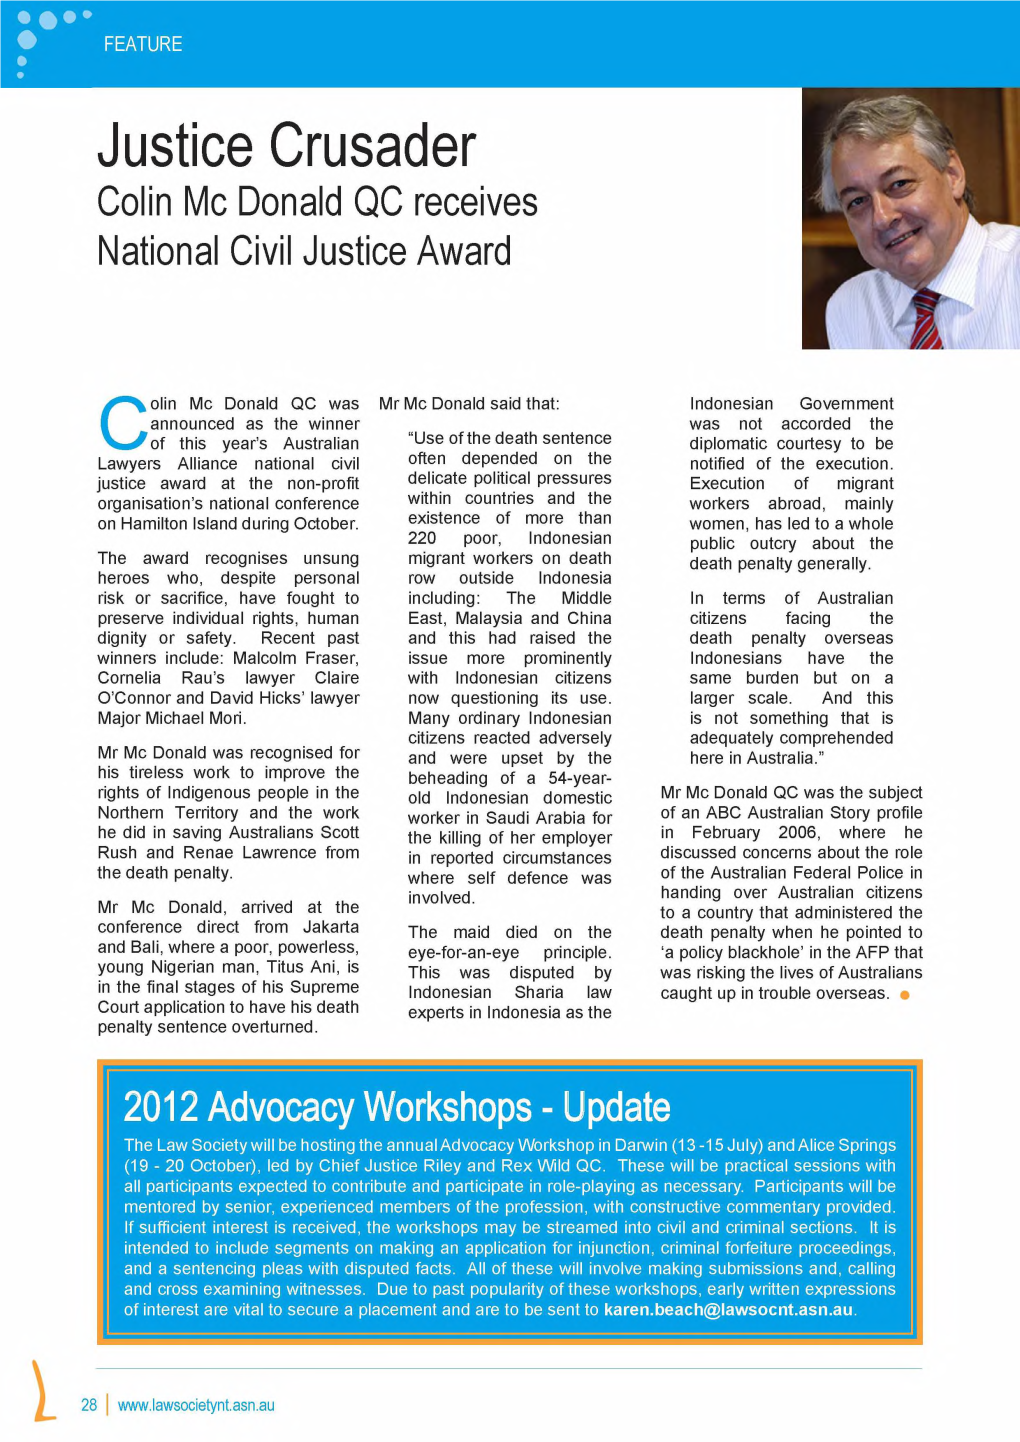 Justice Crusader Colin Me Donald QC Receives National Civil Justice Award